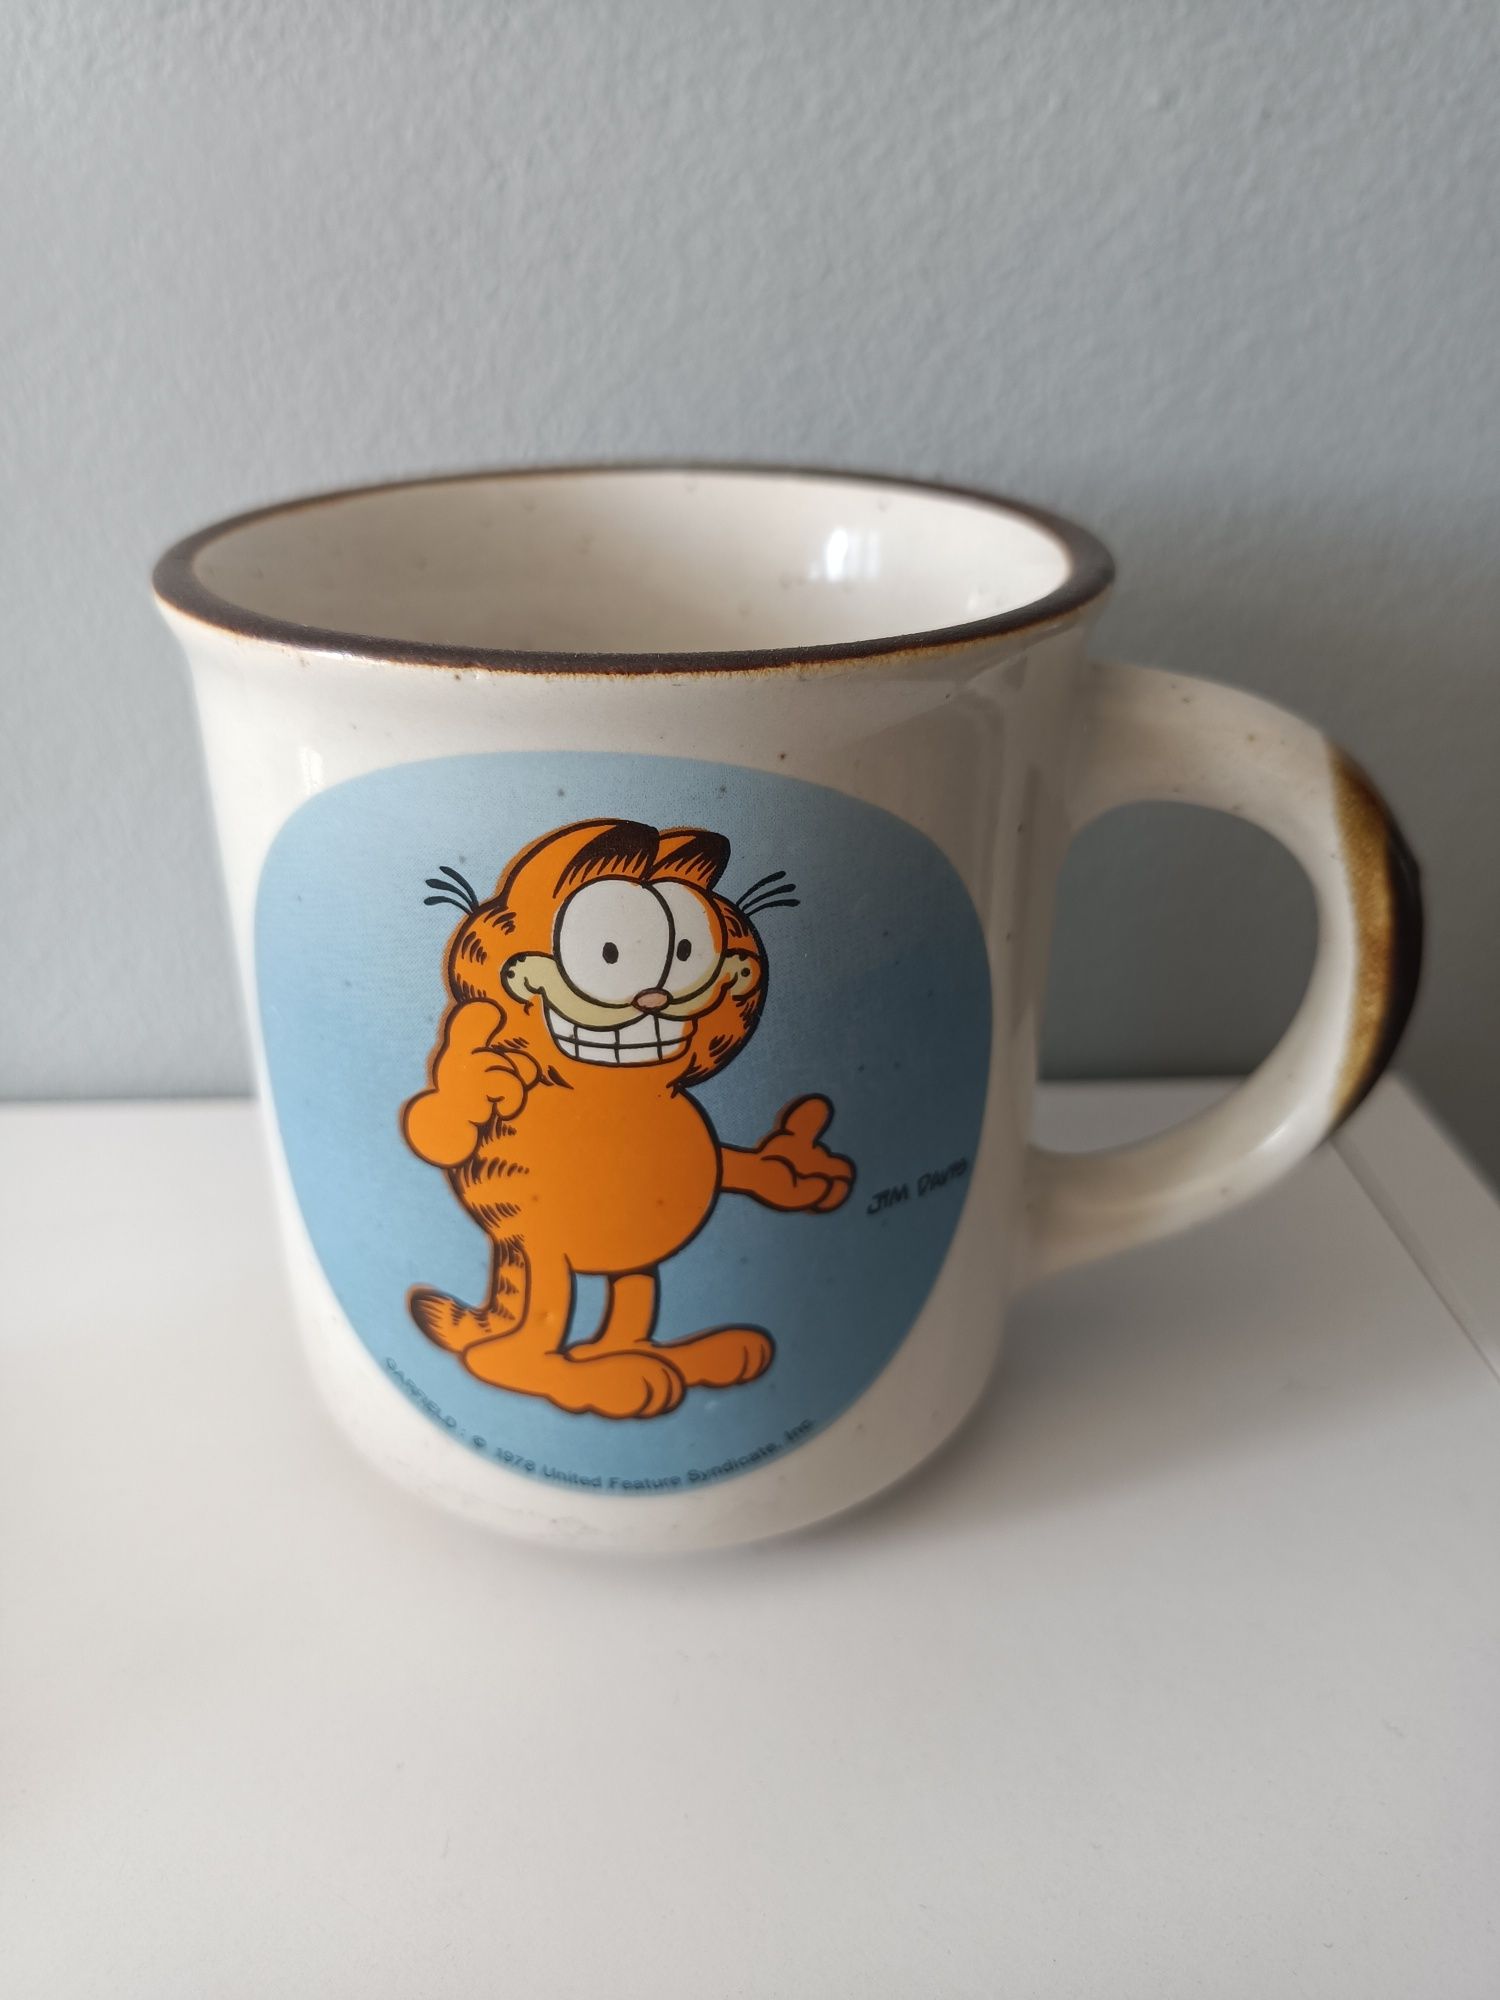 Kubek PRL Garfield unikat kolekcjonerski kubeczek 1978 rok